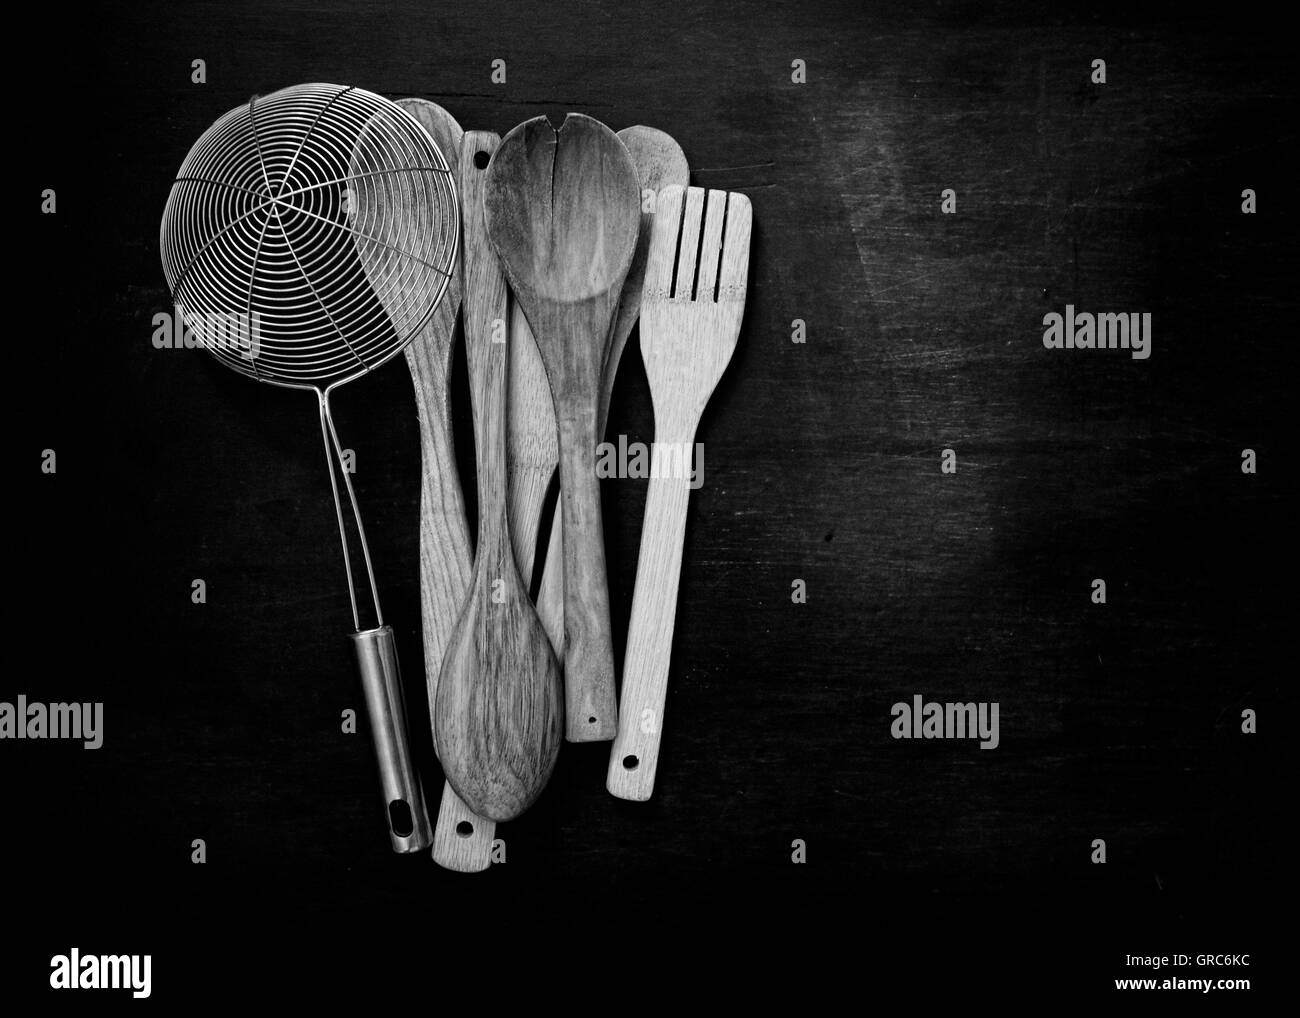 Arnese cucchiaio da cucina in legno nutrizione dieta alimentare quantità forcella metallica Foto Stock